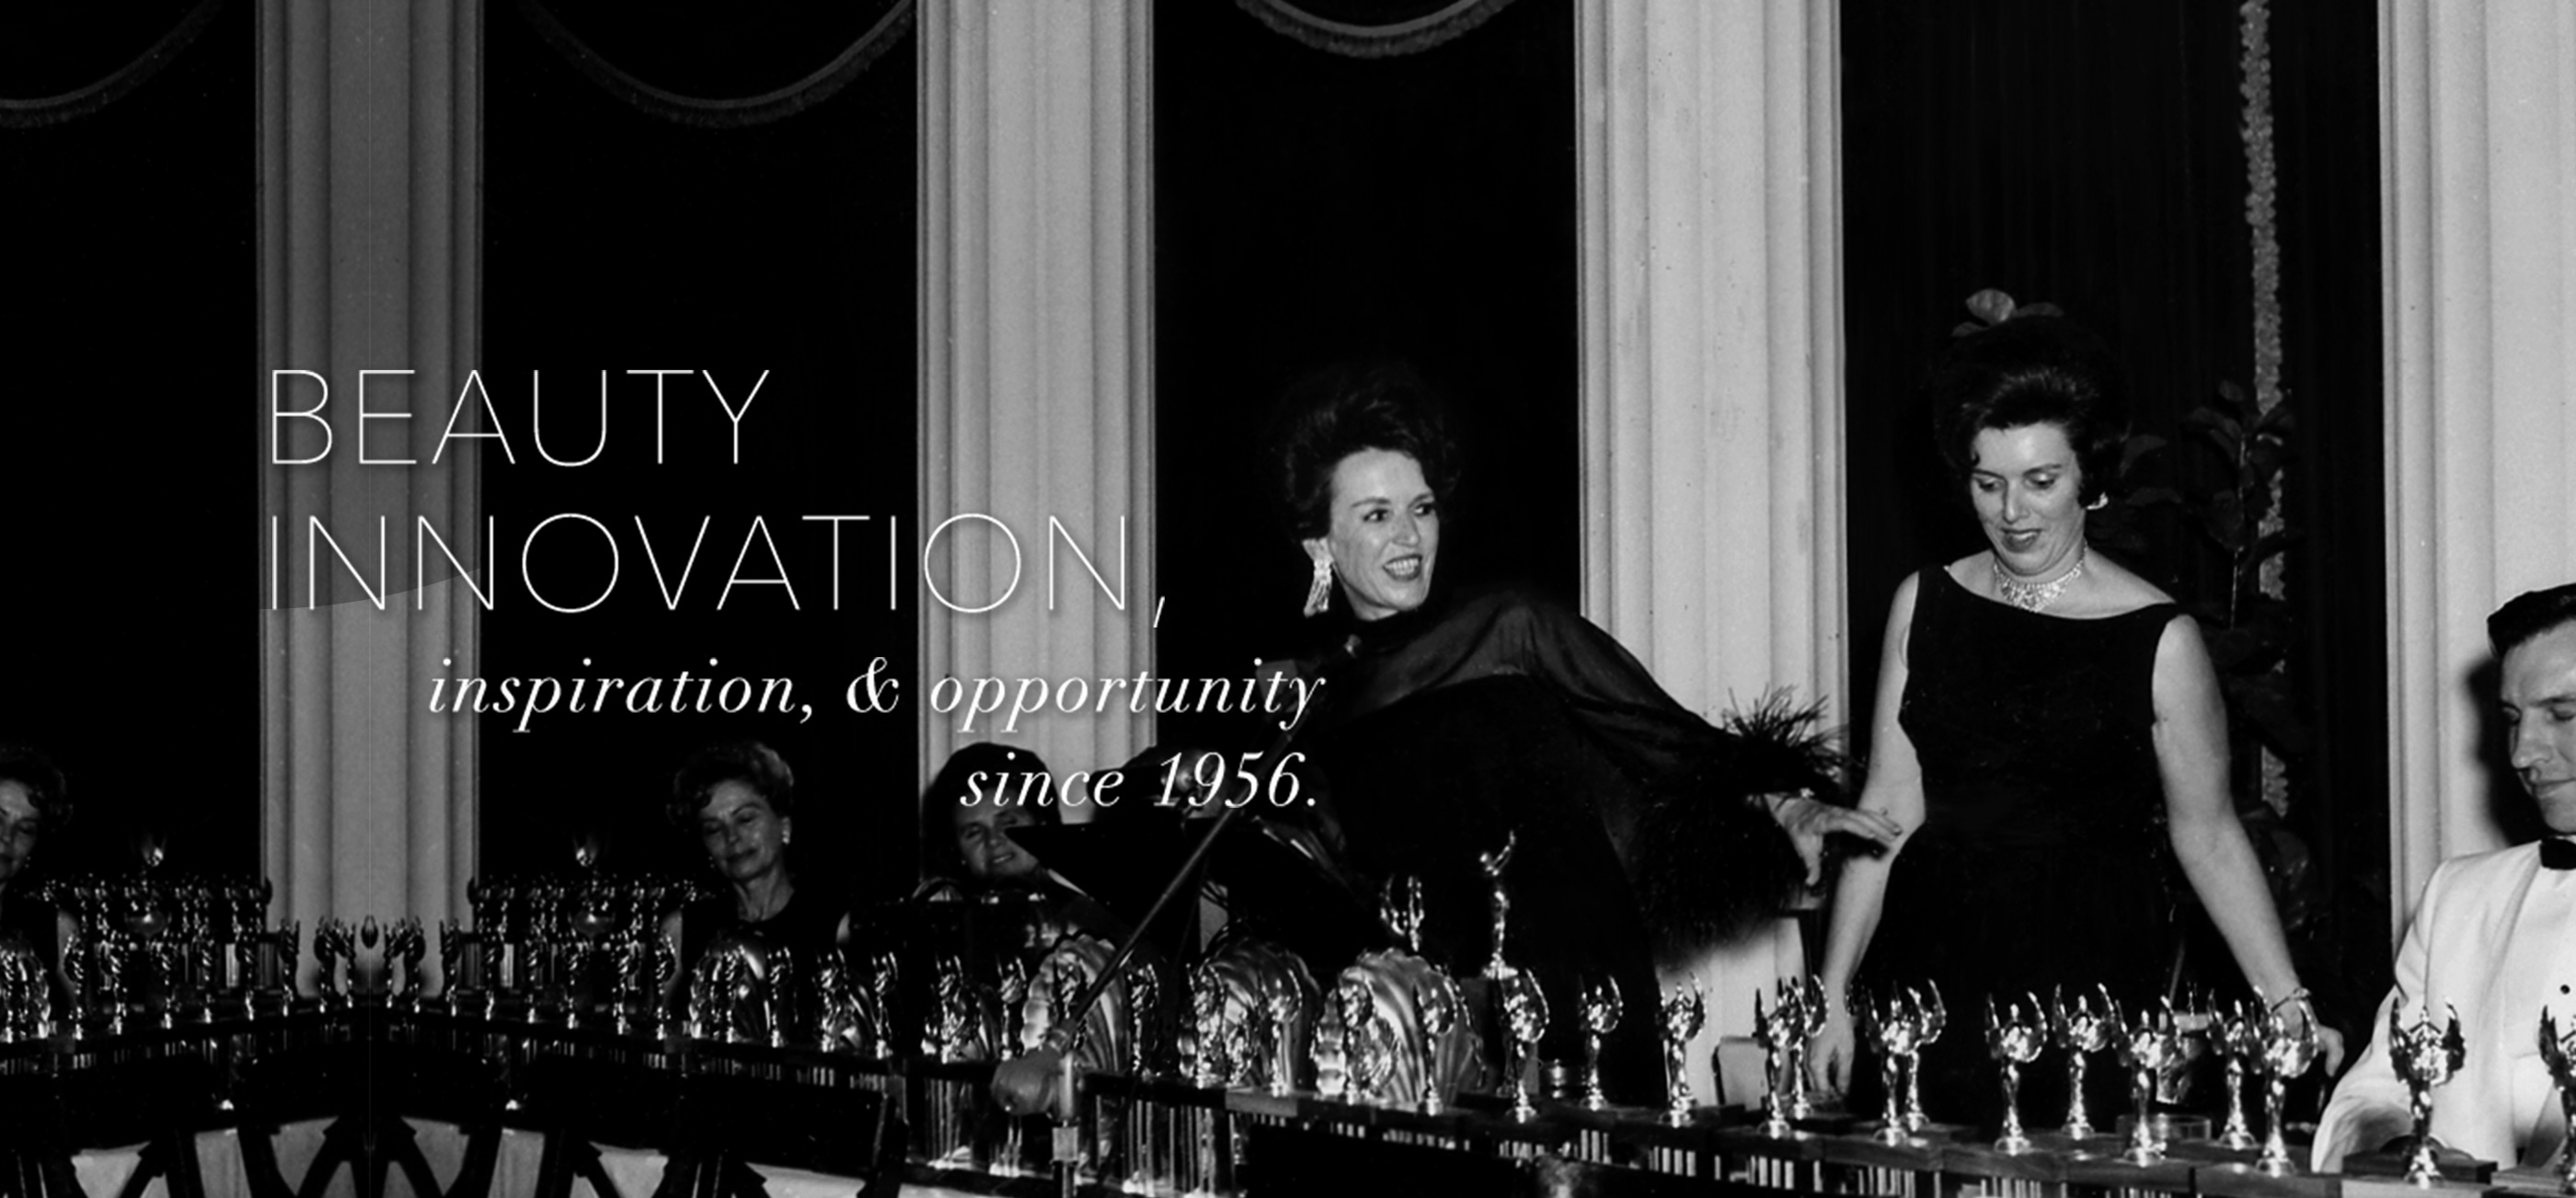 Beauty, Innovation, Inspiration and Opportunity since 1956.